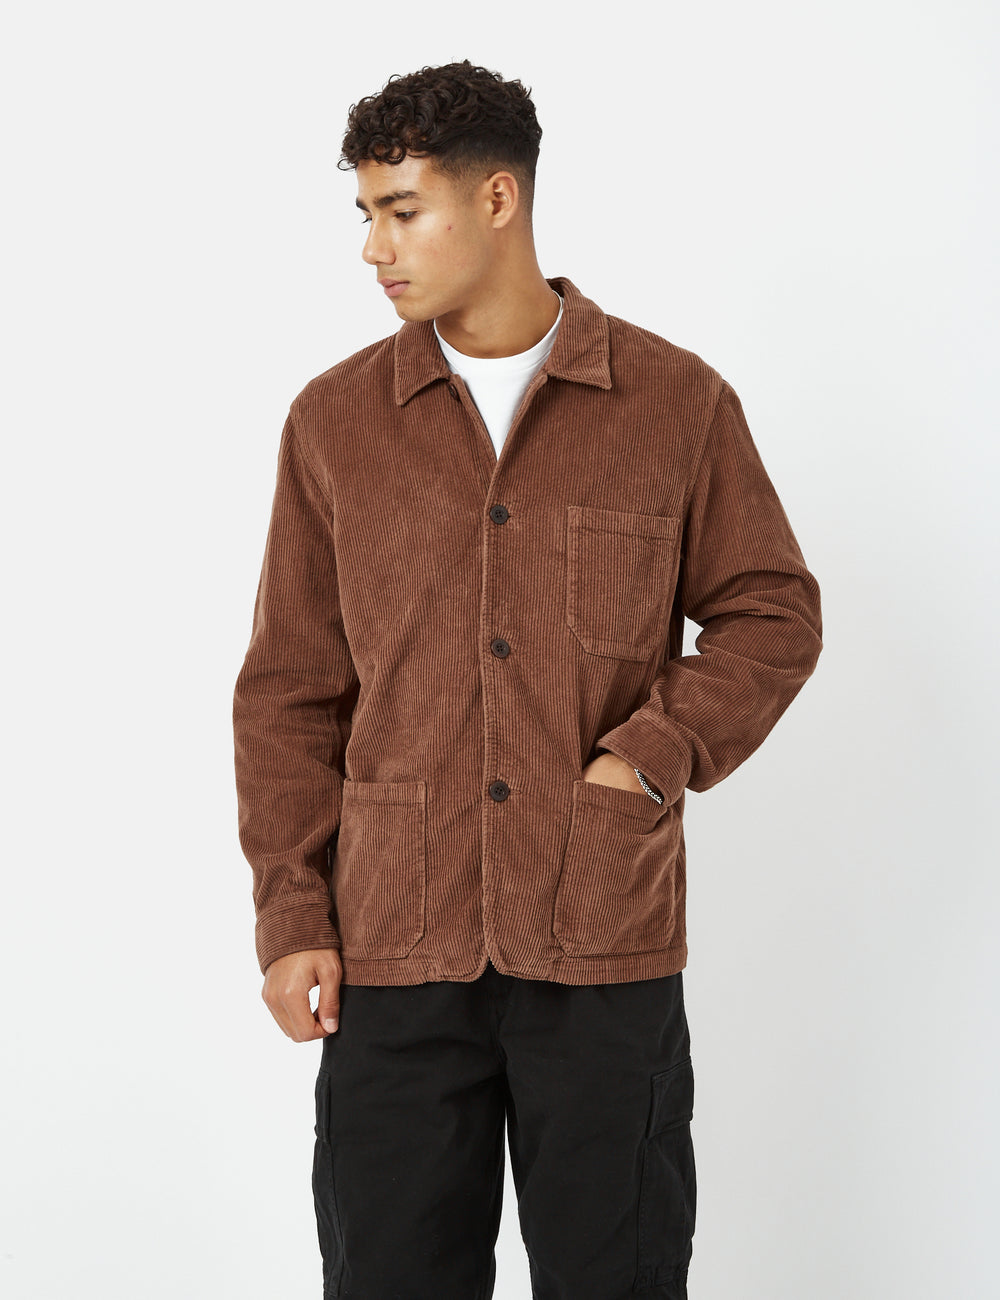 Portuguese Flannel Labura Jacket (Corduroy) - Brown i Urban Excess